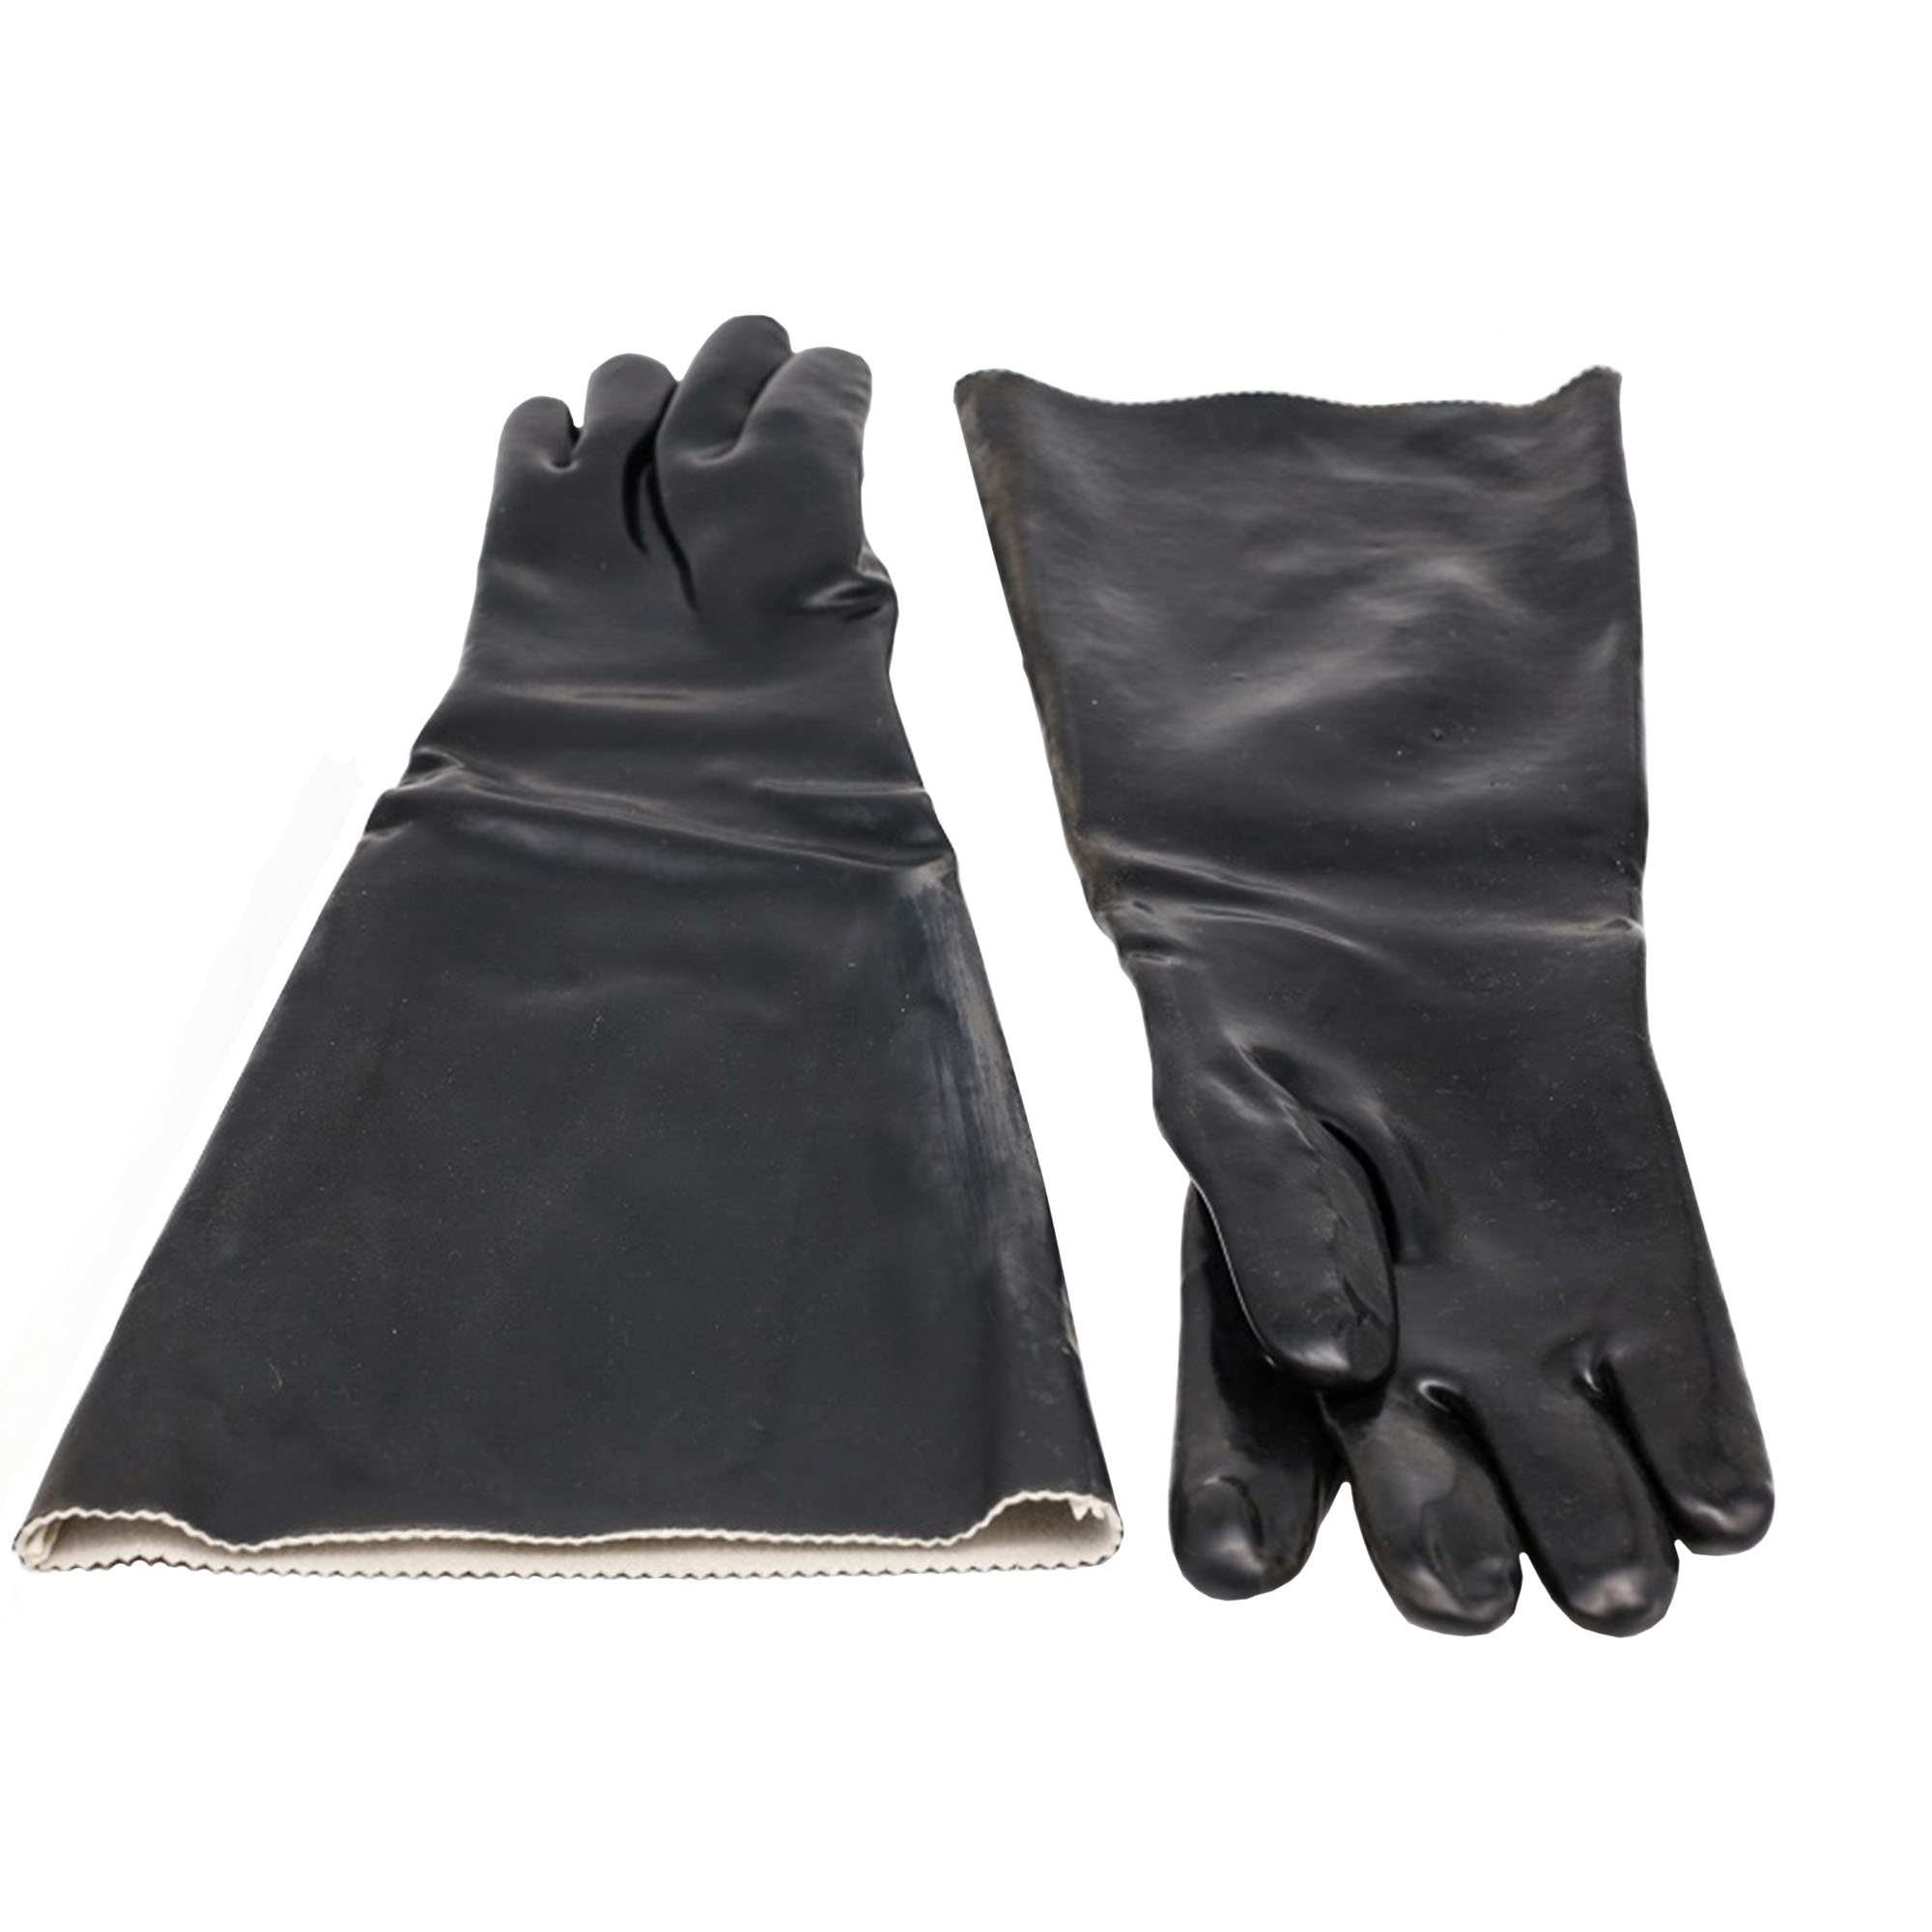 Cabinet Sandblaster Parts, Parts & Accessories, Rubber Sandblasting Gloves Cotton Lined 33", 3034 Rubber Gloves, American Hawk Industrial, Dee-Blast